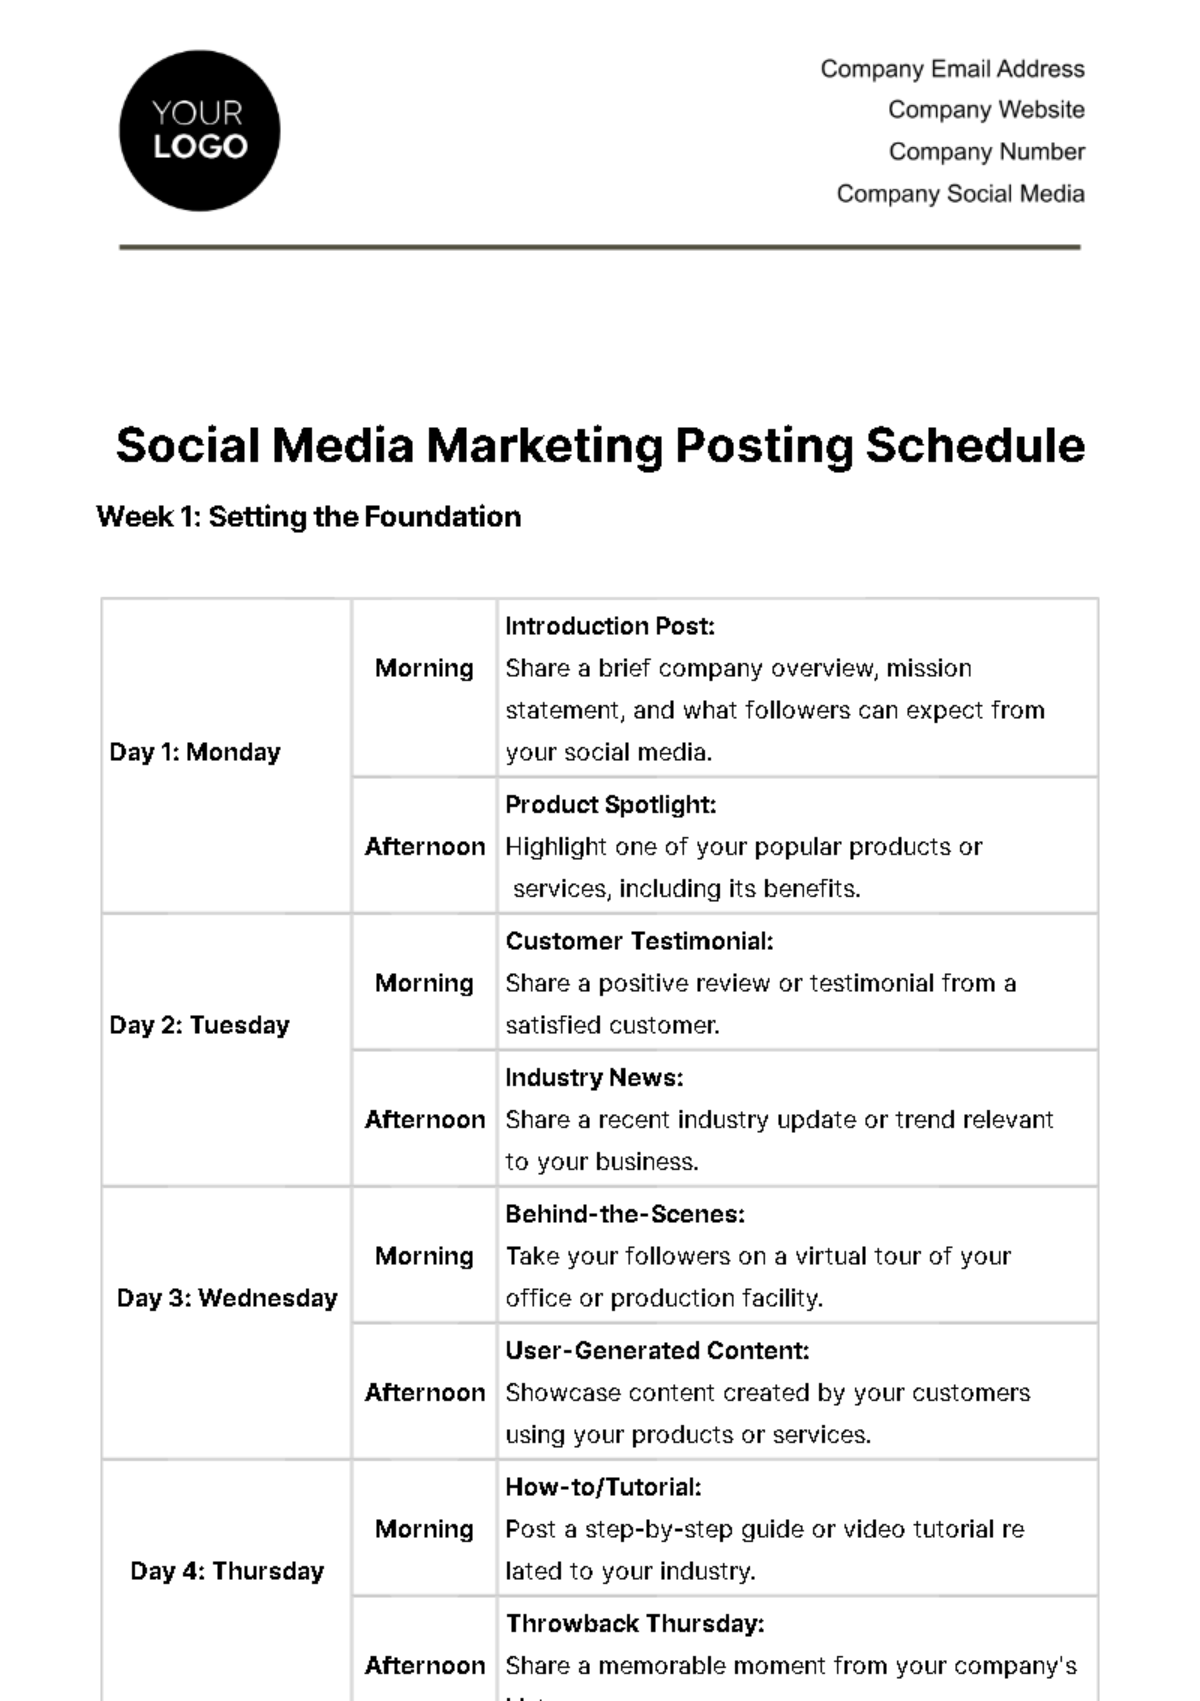 Social Media Marketing Posting Schedule Template